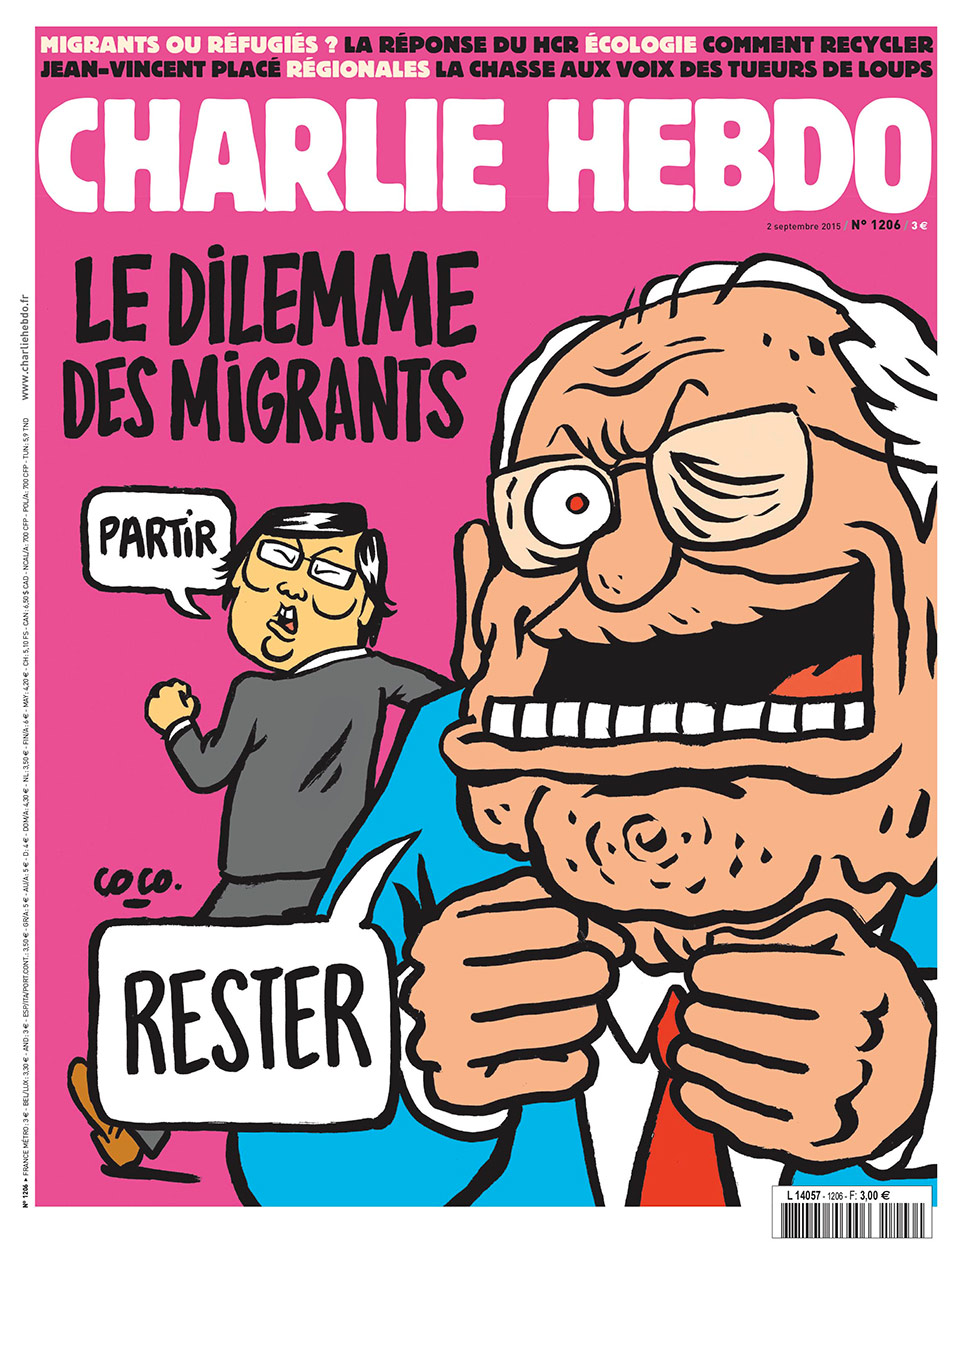 Charlie Hebdo n°1206 --- 2 septembre 2015